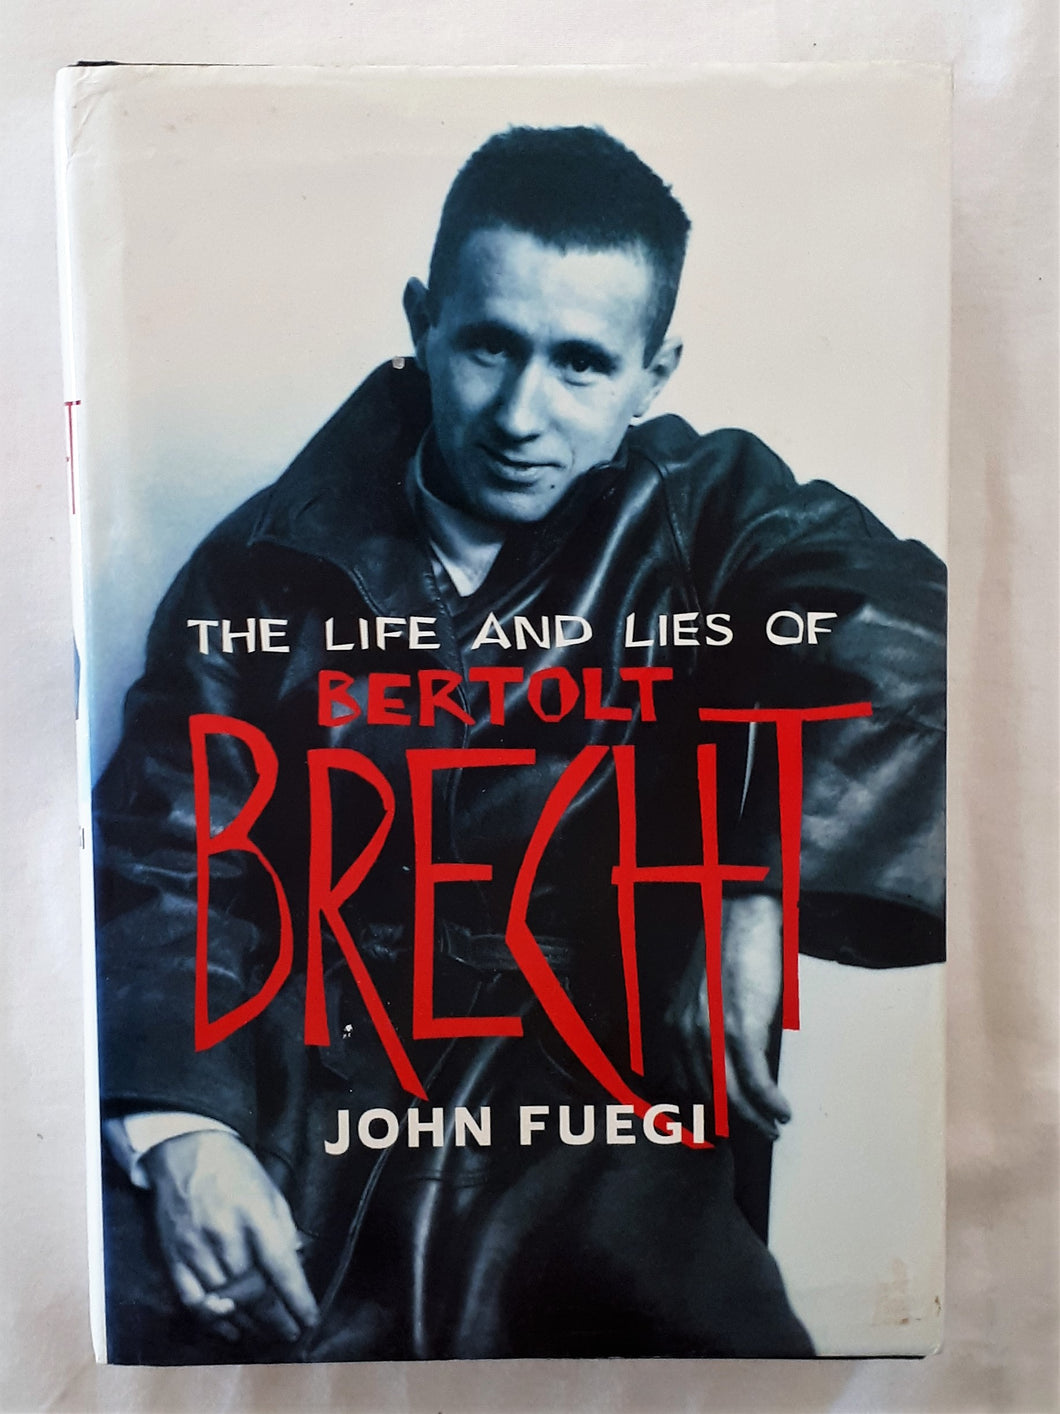 The Life and Lies of Bertolt Brecht by John Fuegi